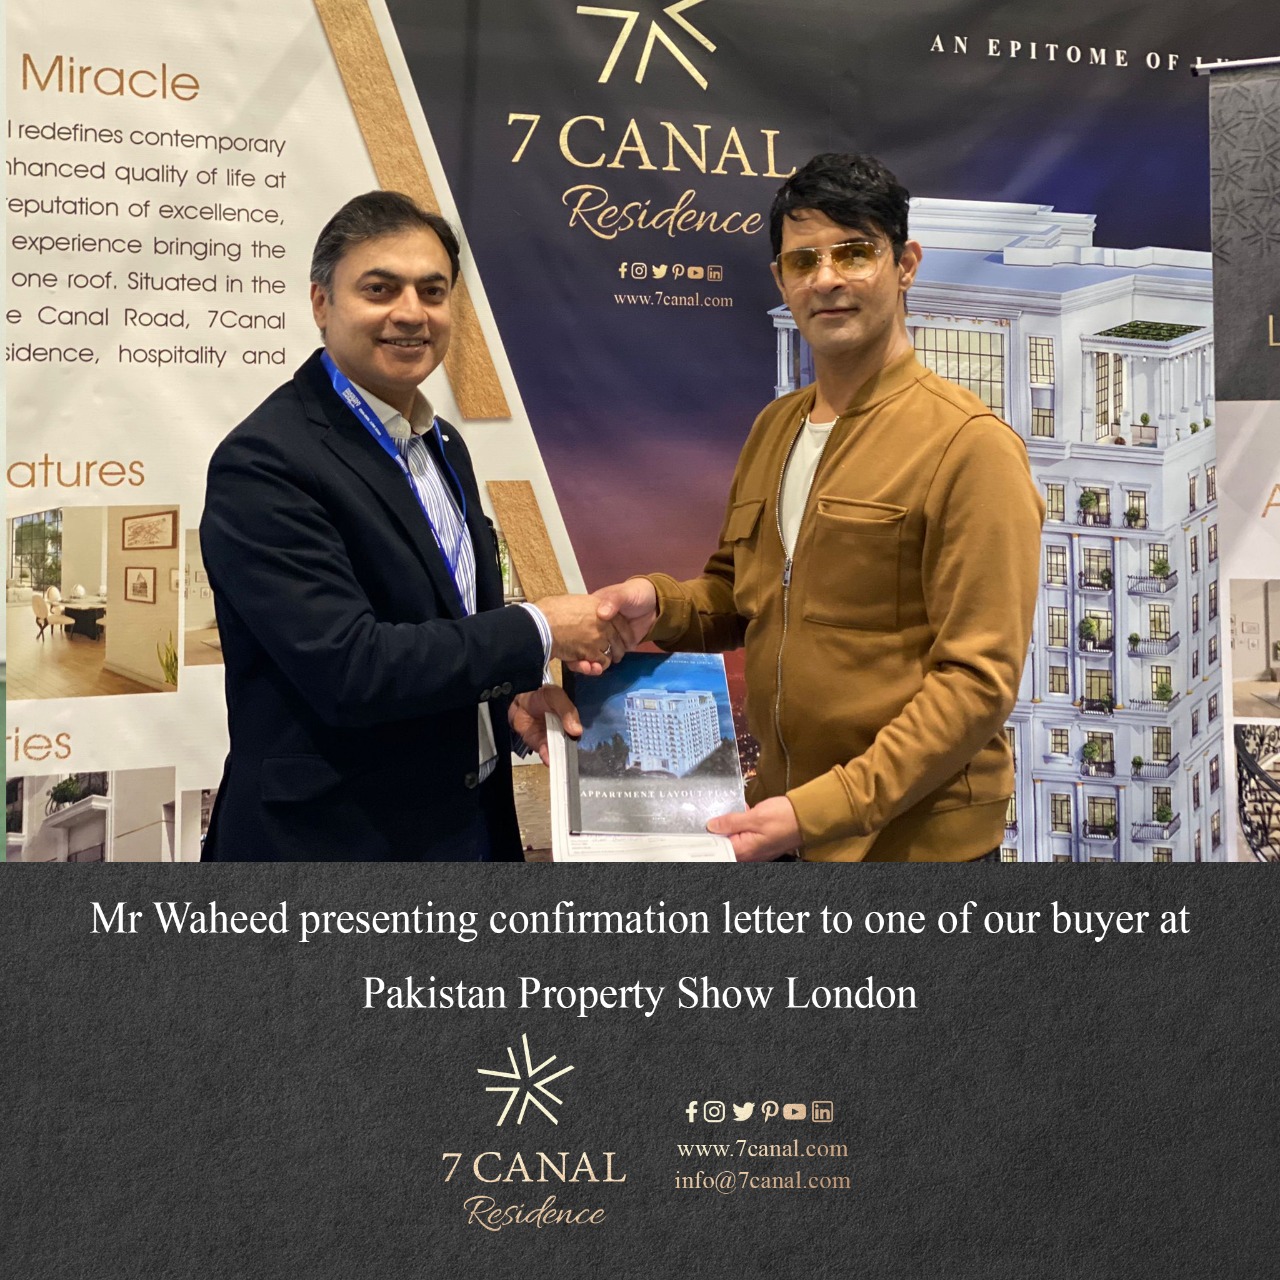 Pakistan Property Show London Event